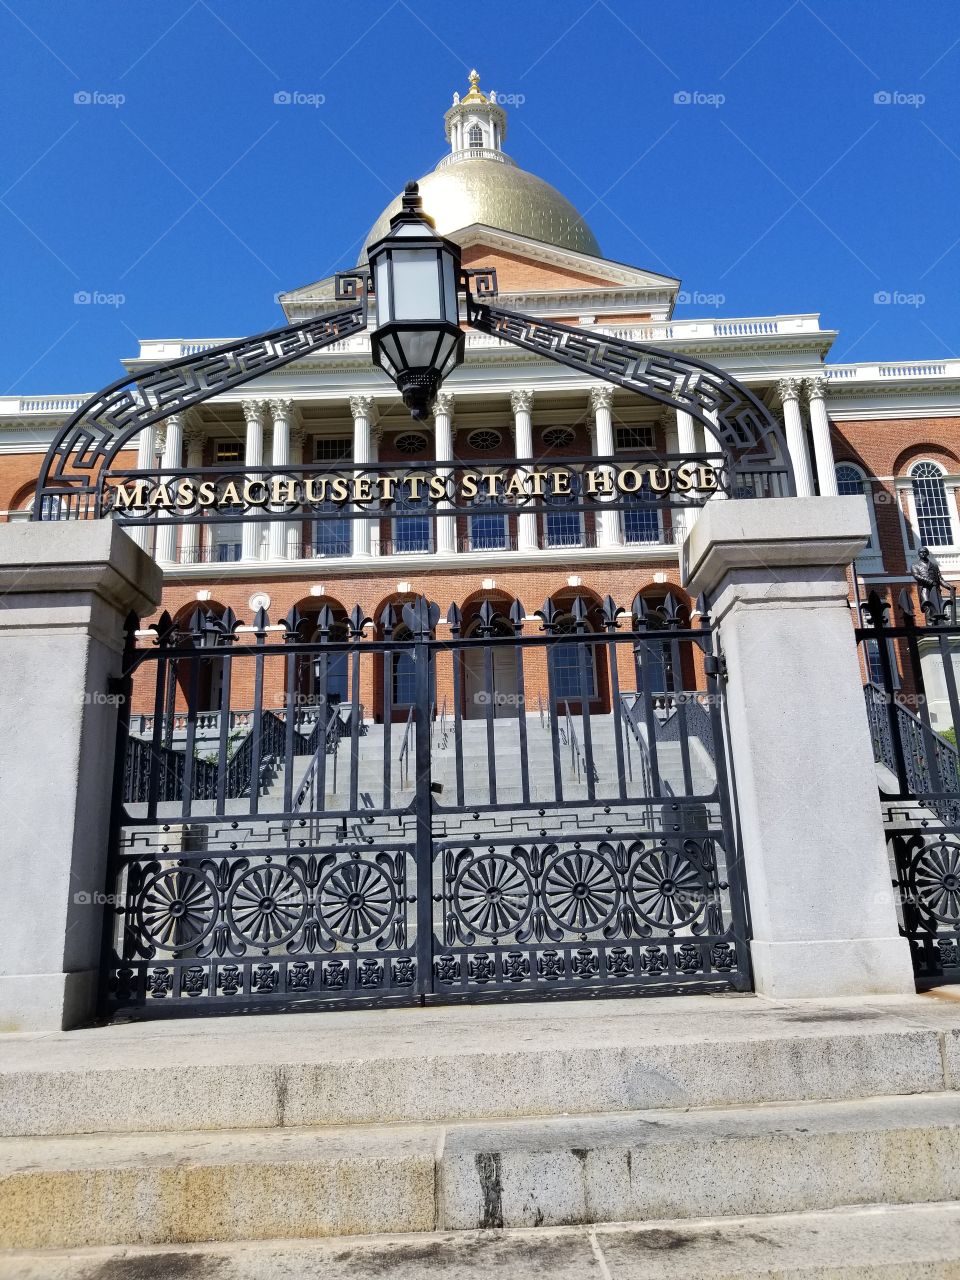 Massachusetts State house in Boston